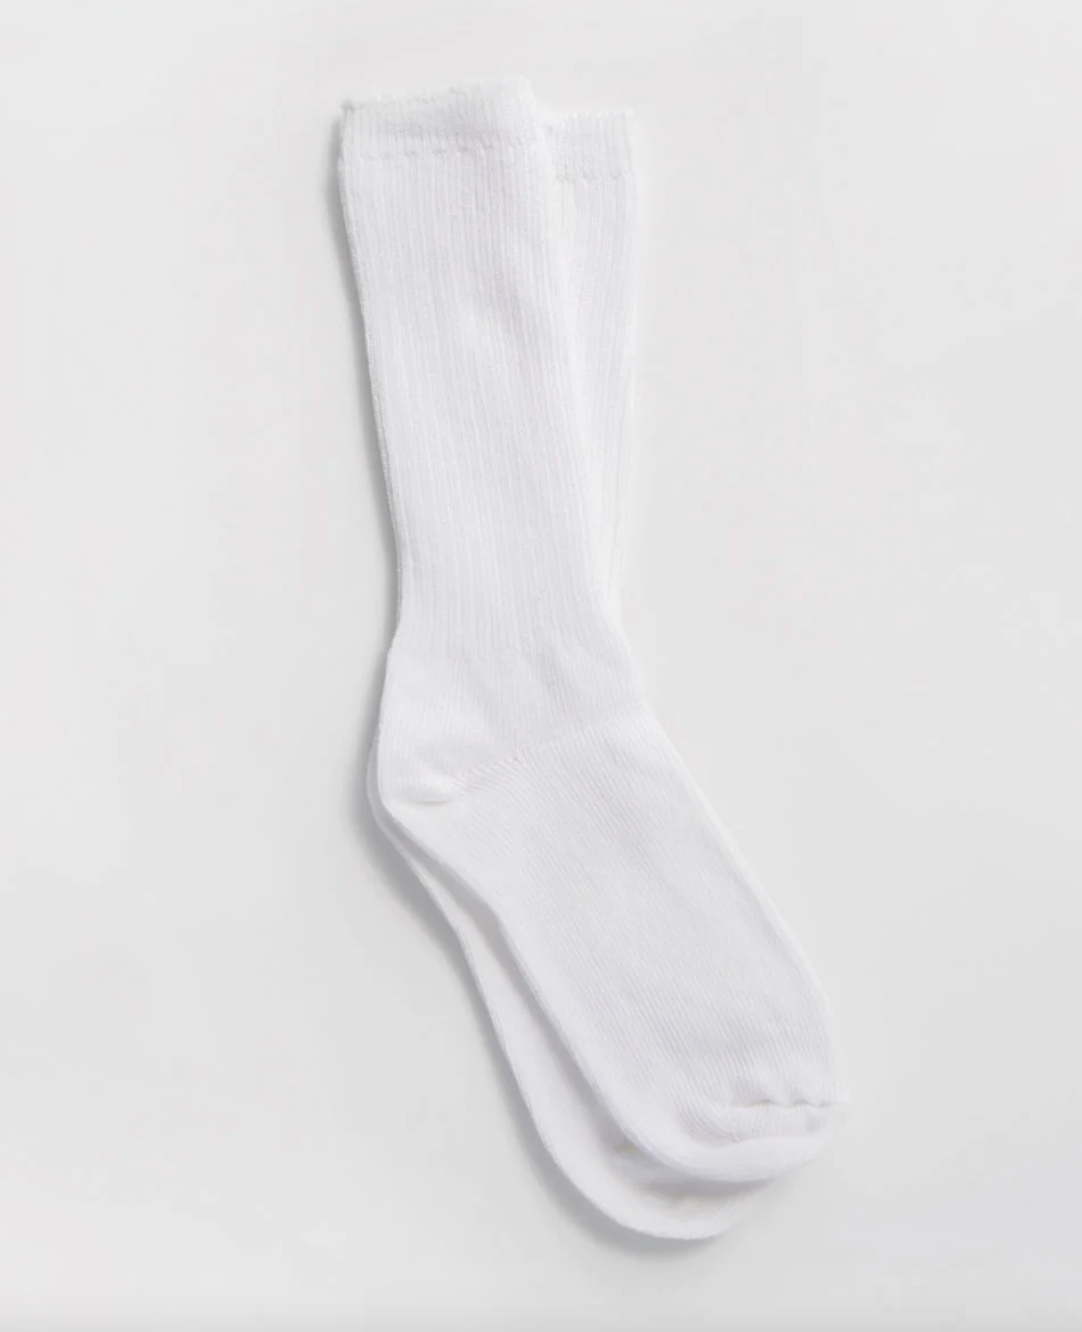 Cotton socks by OKAYOK